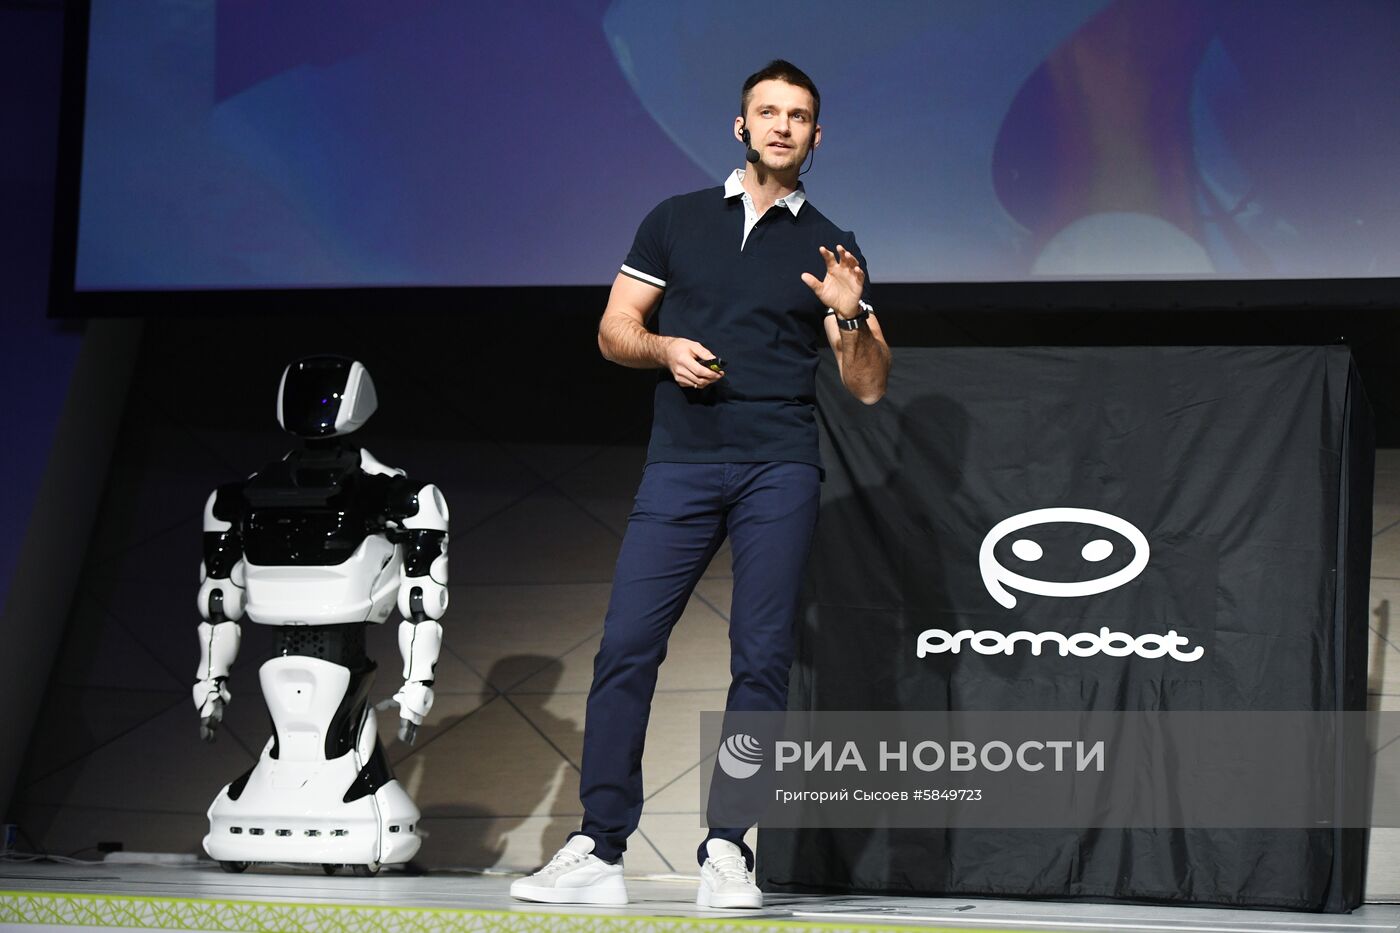 Форум Skolkovo Robotics